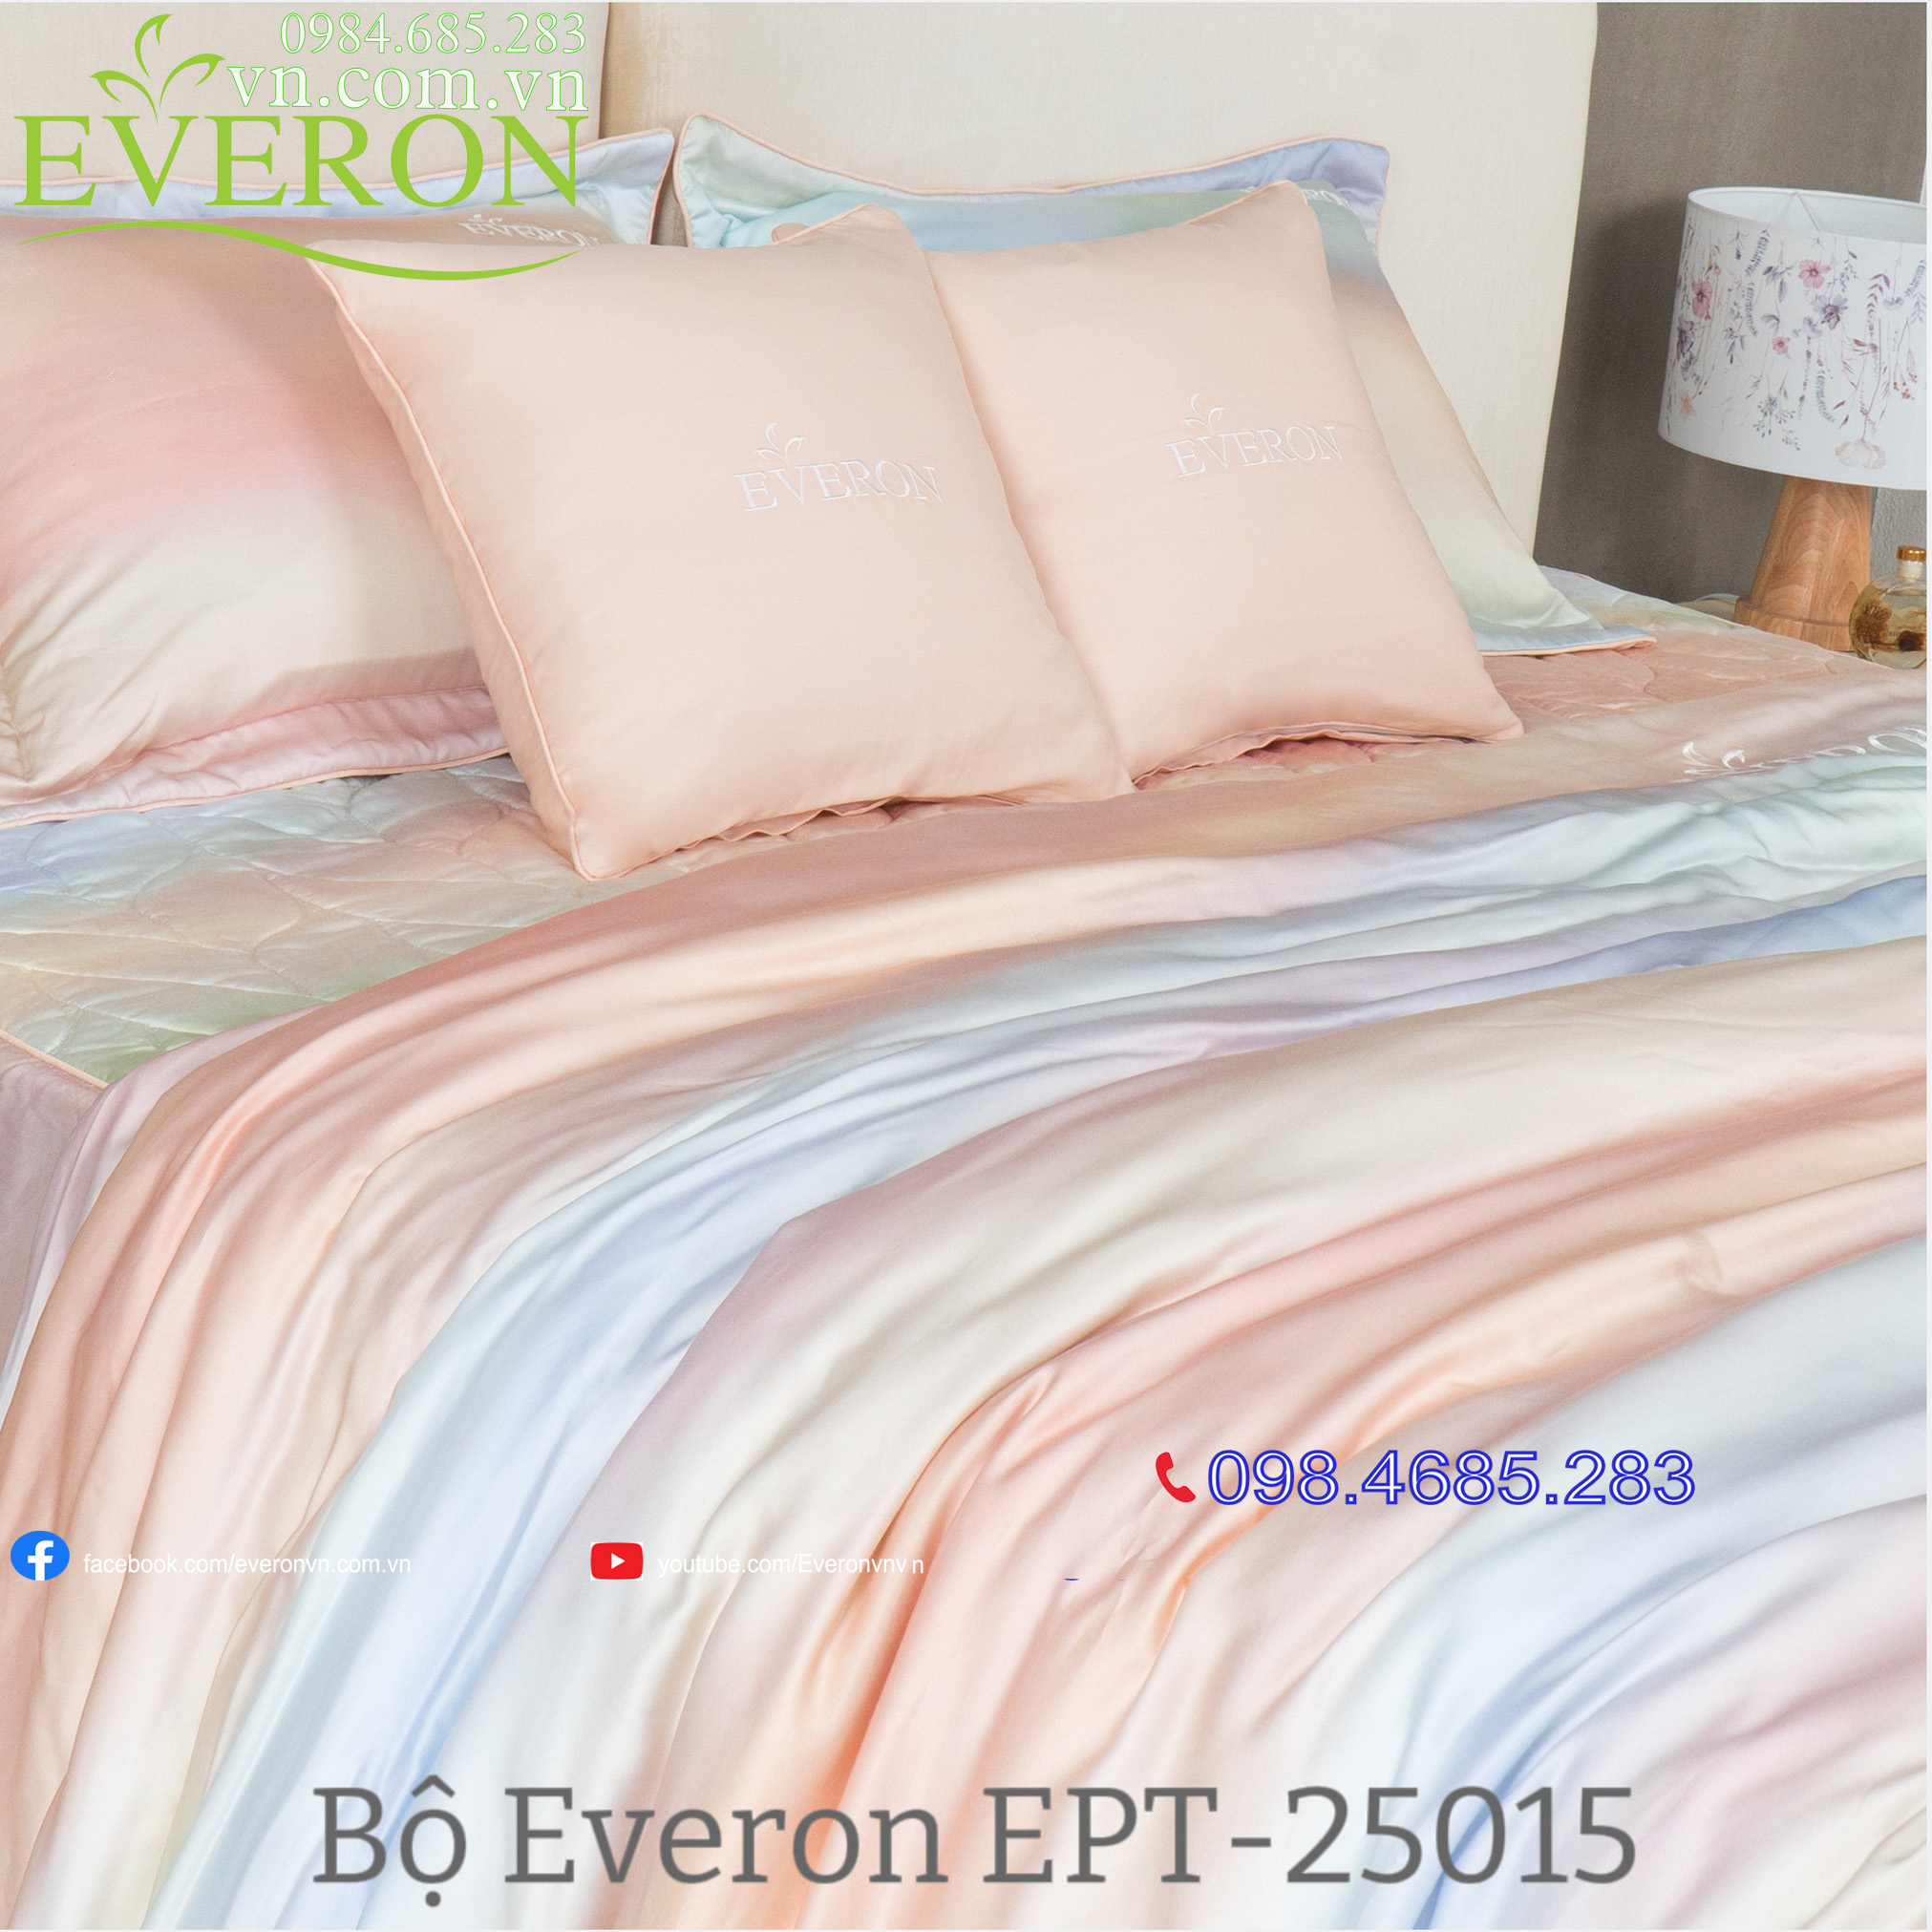 Bộ Everon EPT-25015